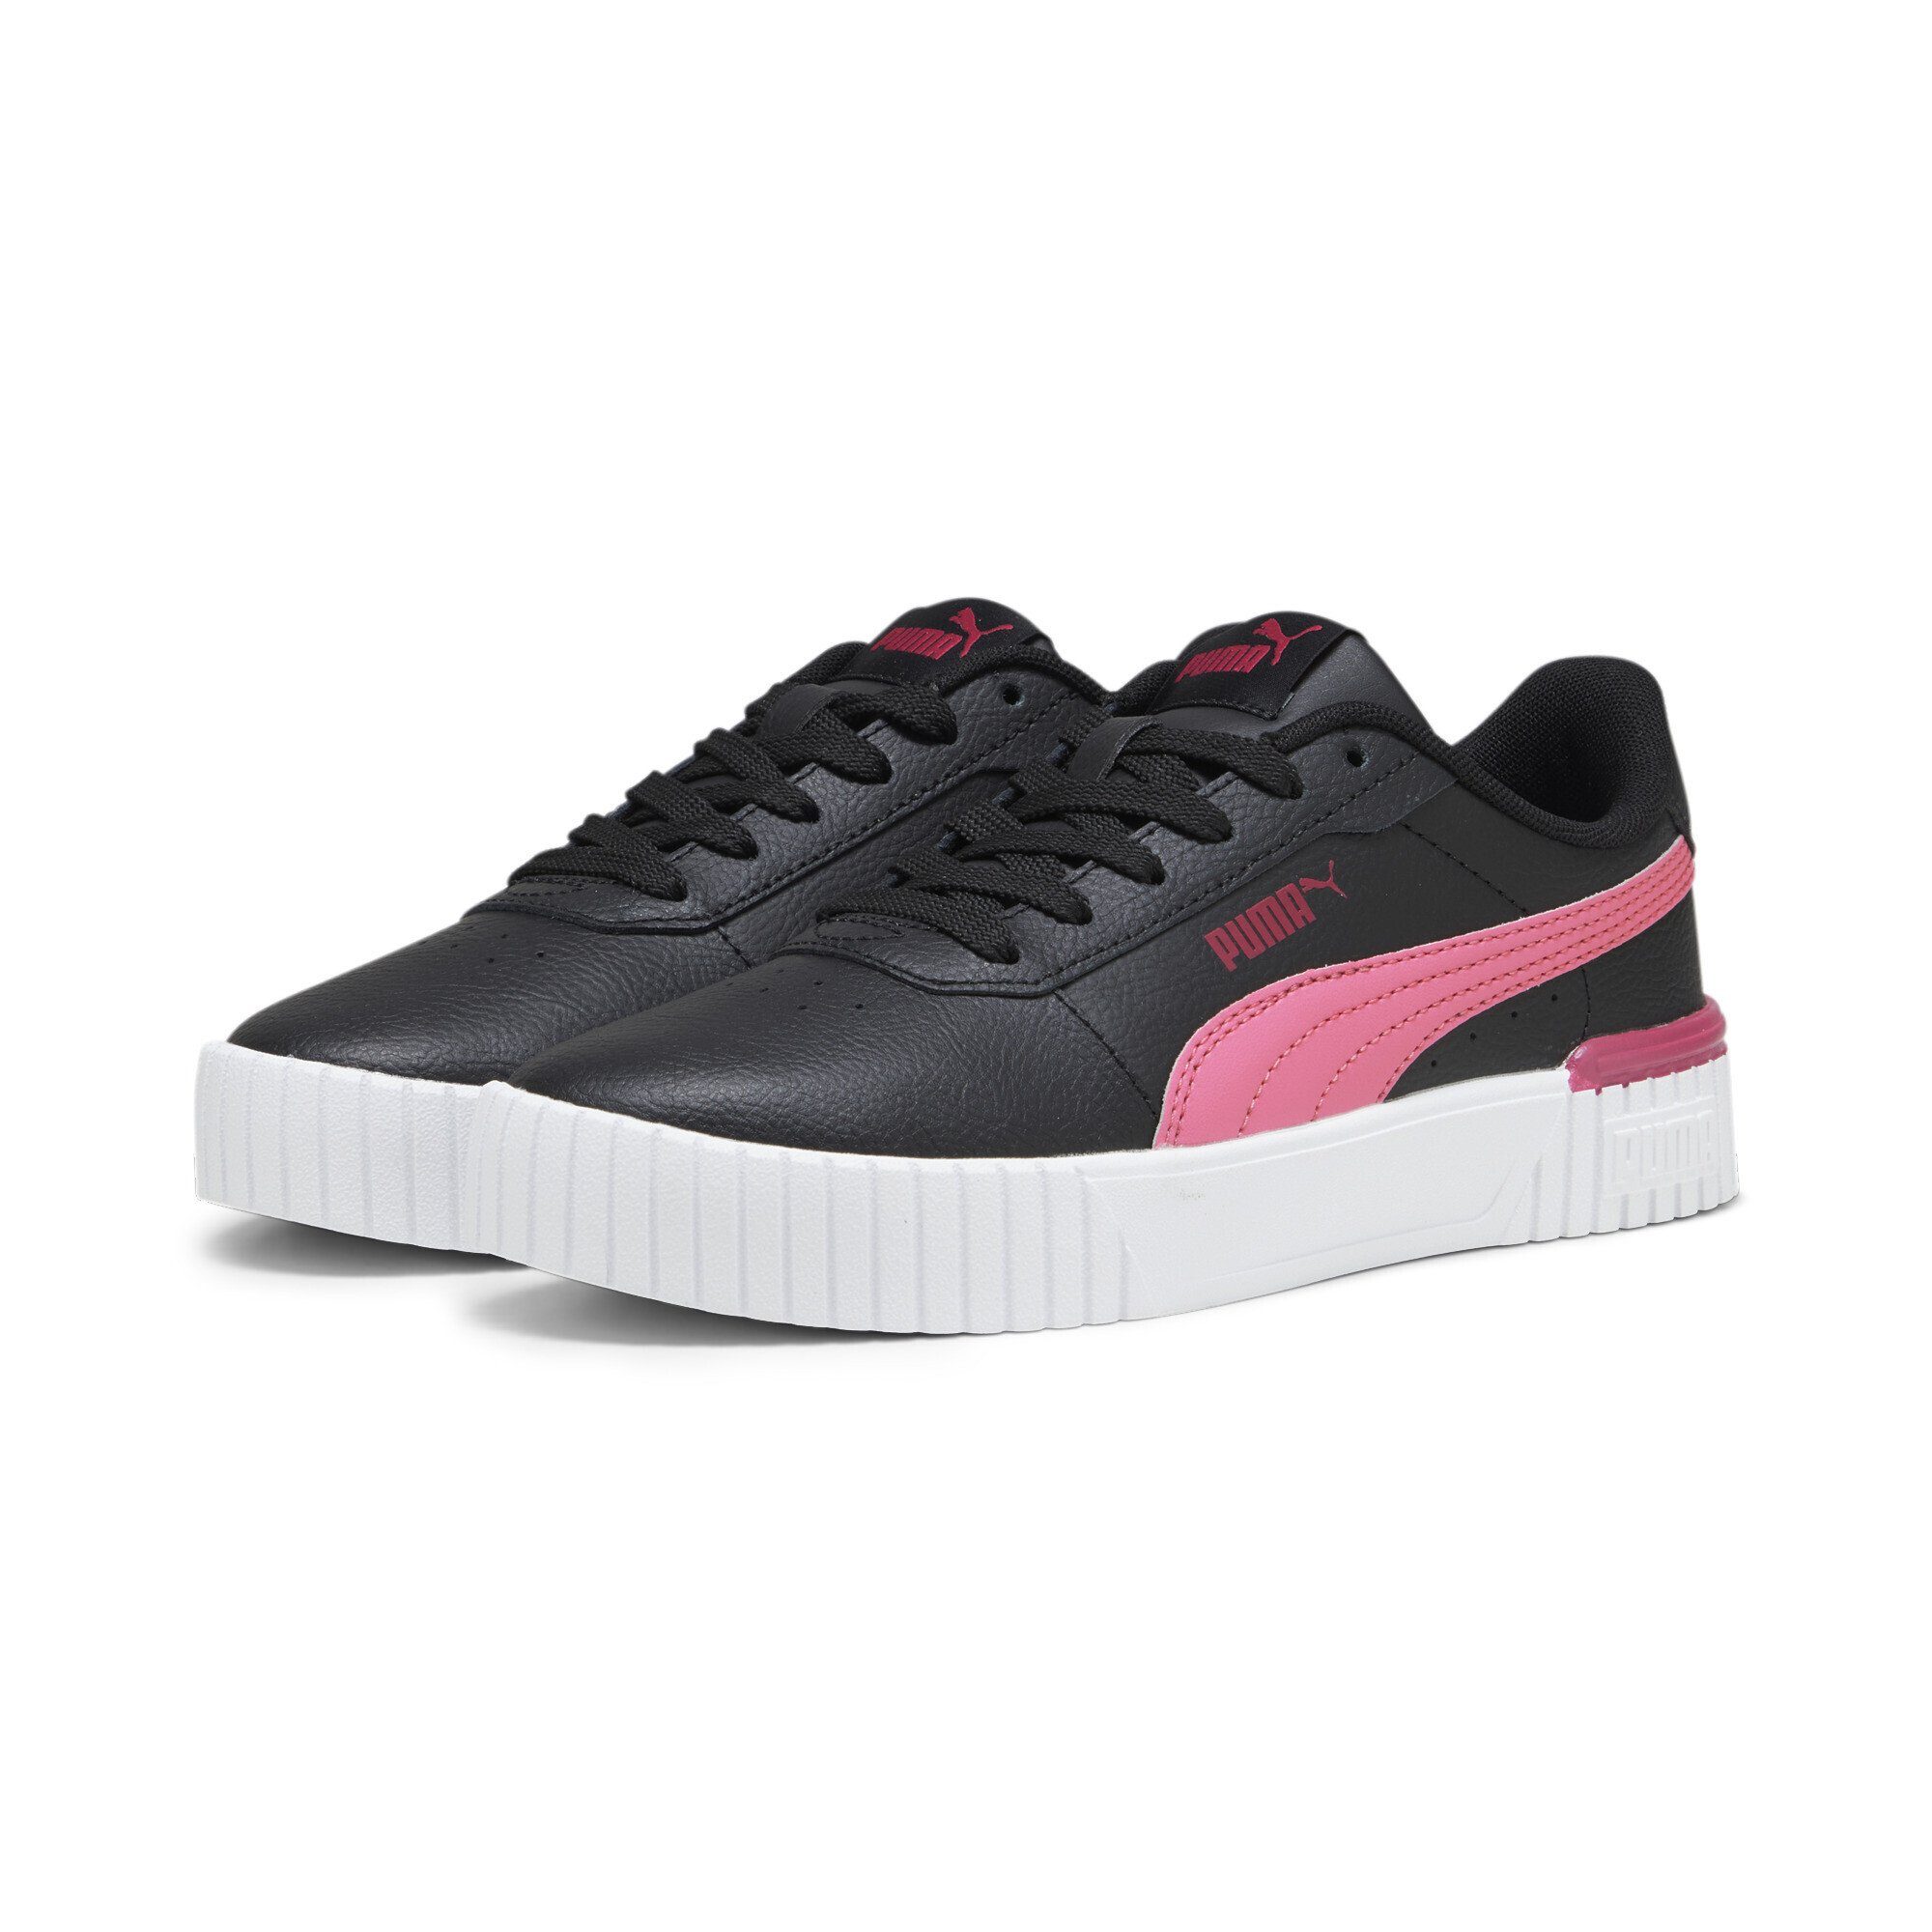 Carina Strawberry Jugendliche Pinktastic Pink Sneakers Burst 2.0 Black PUMA Sneaker White